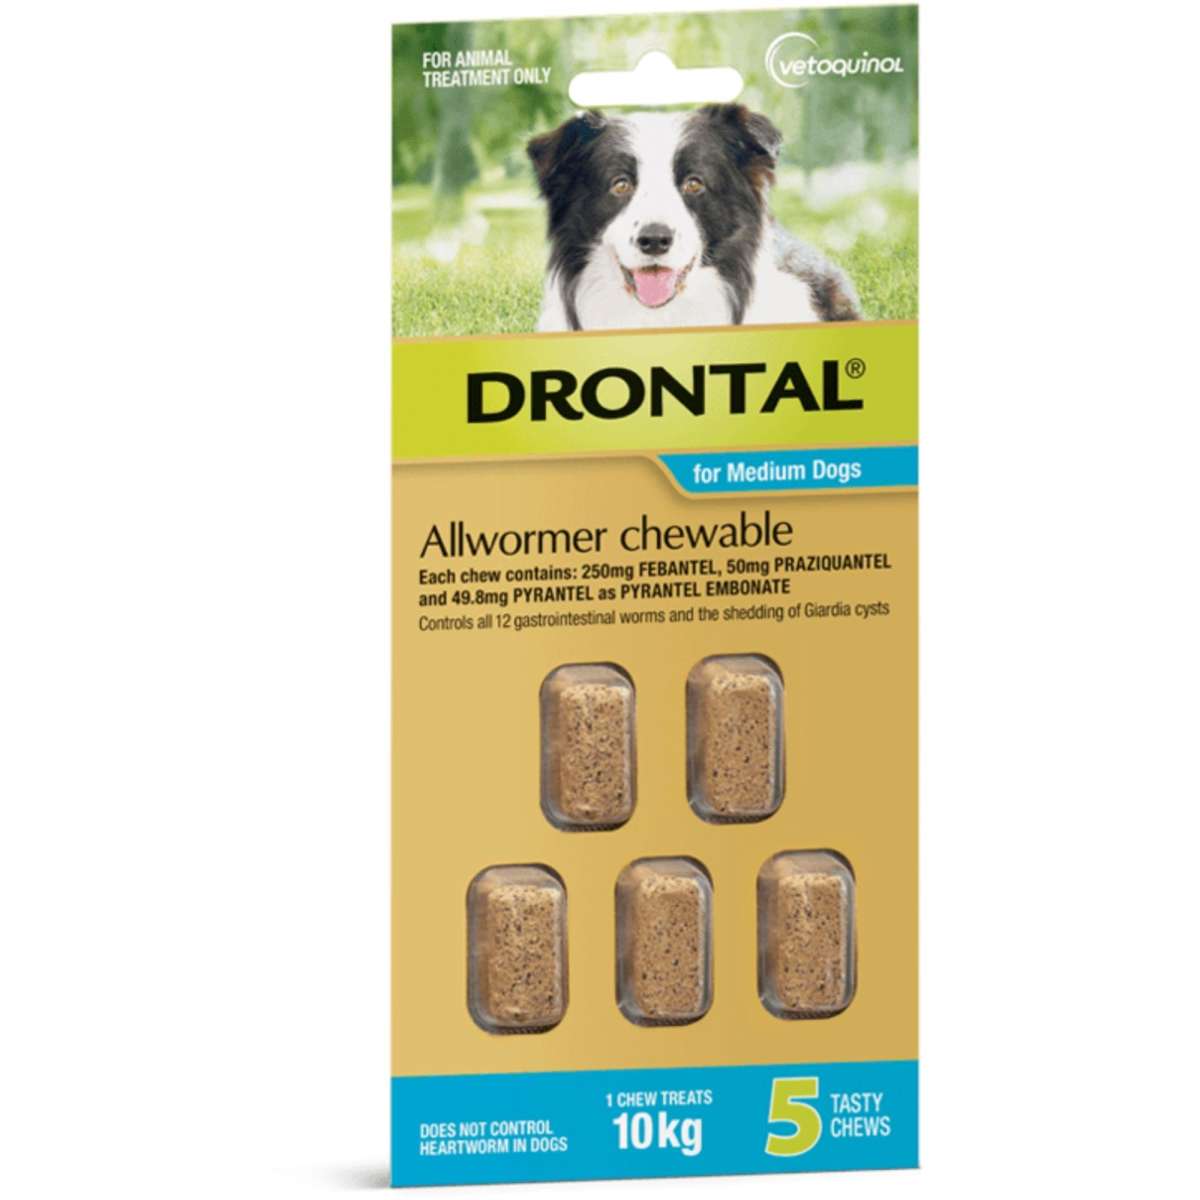 Drontal Allwormer Dogs 10kg x 5 Chews